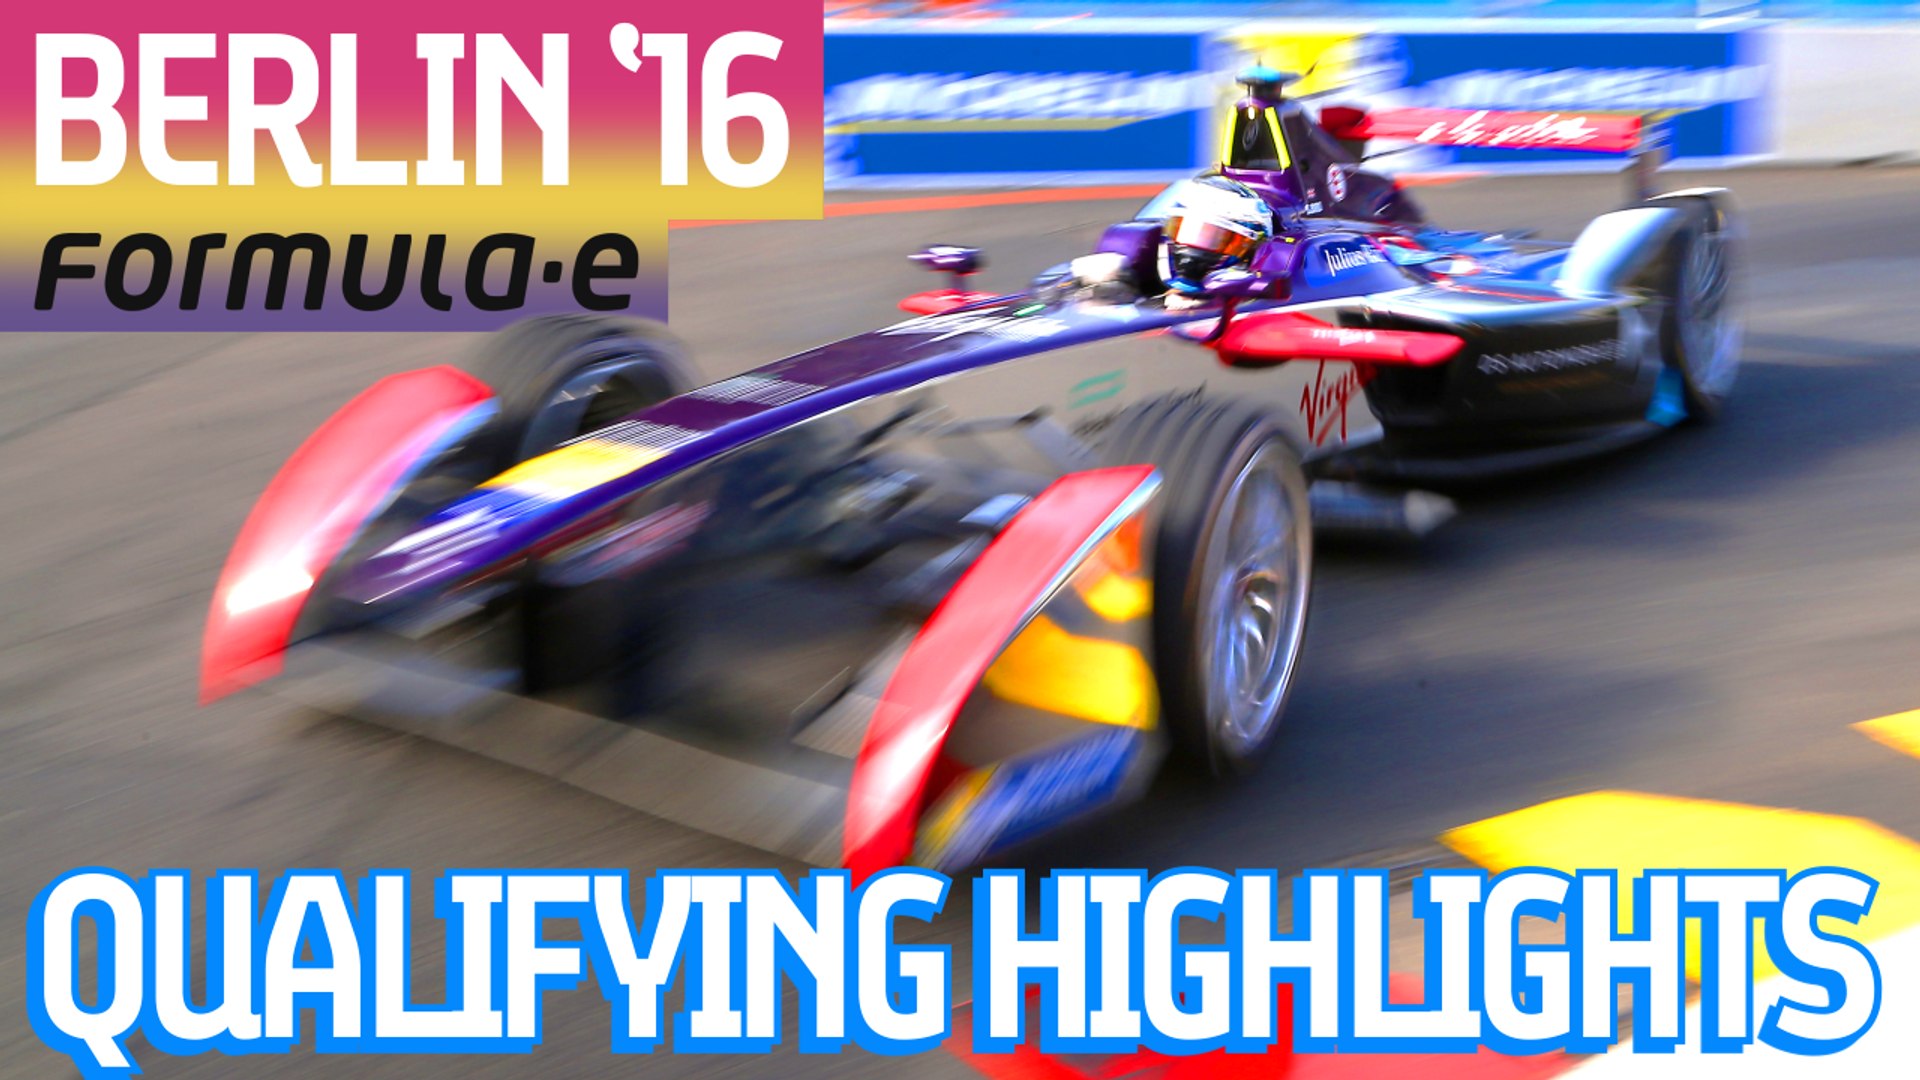 Berlin 2016 Qualifying Highlights - Formula E